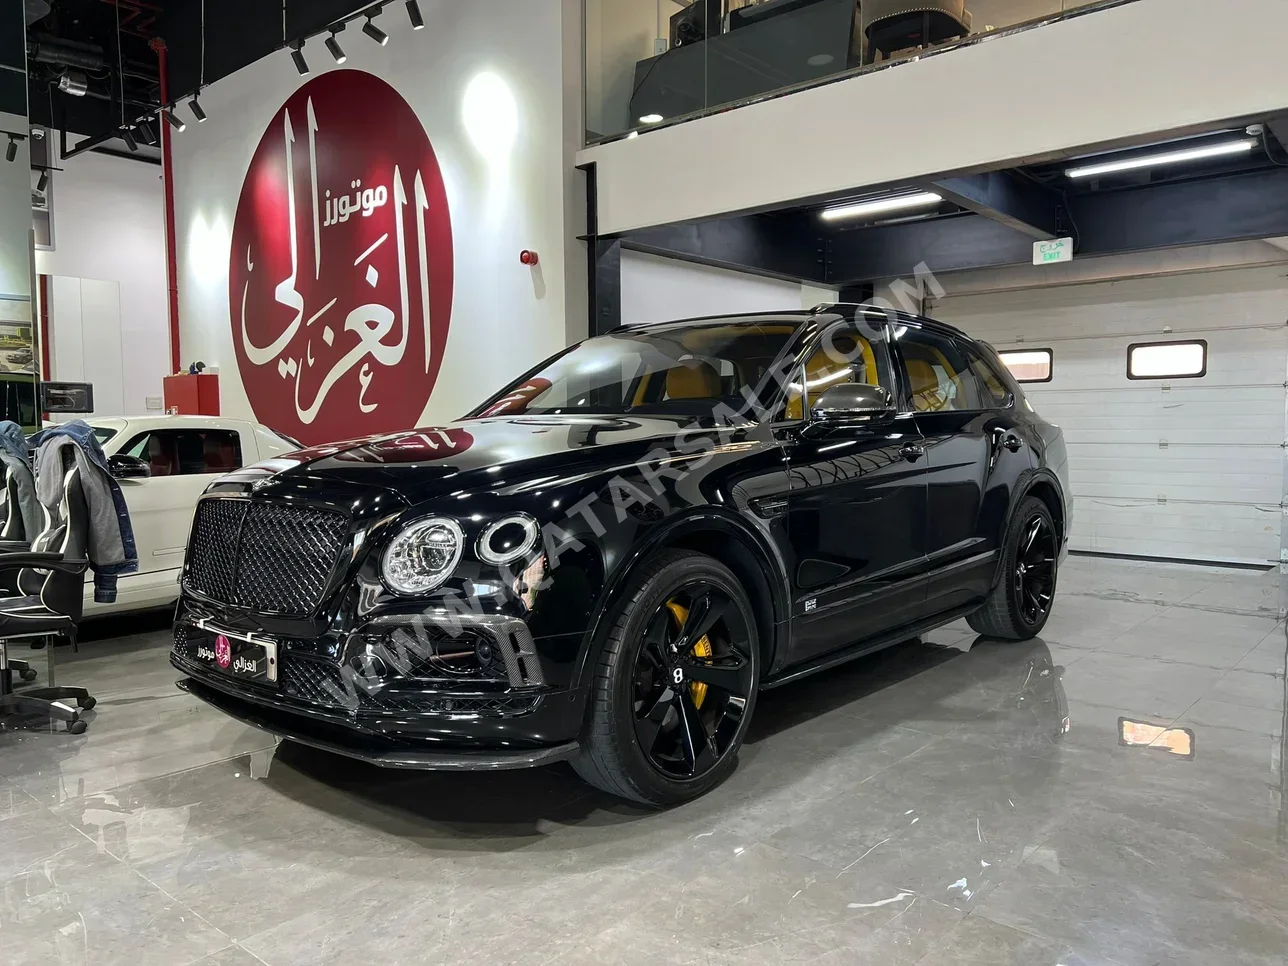 Bentley  Bentayga  2017  Automatic  78,000 Km  12 Cylinder  Four Wheel Drive (4WD)  SUV  Black  With Warranty